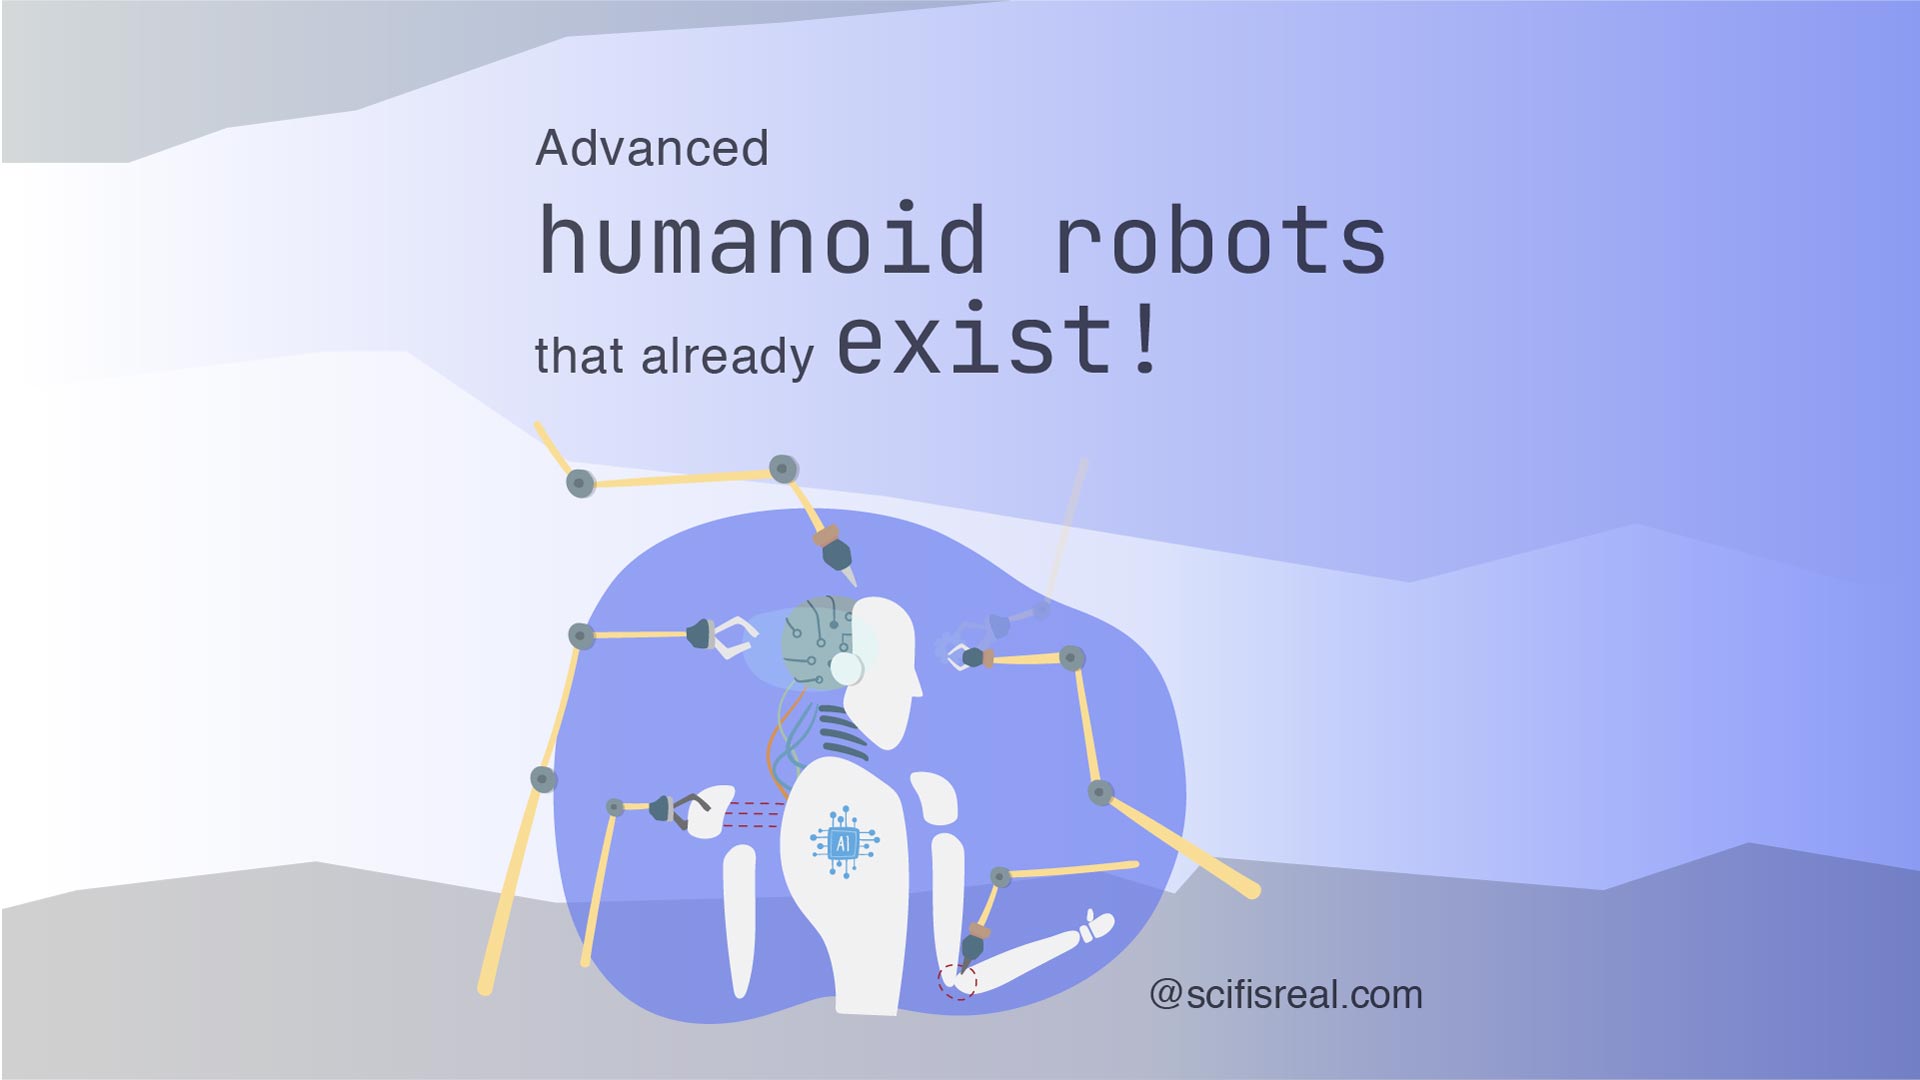 Meet Xiaomi's new humanoid robot, CyberOne